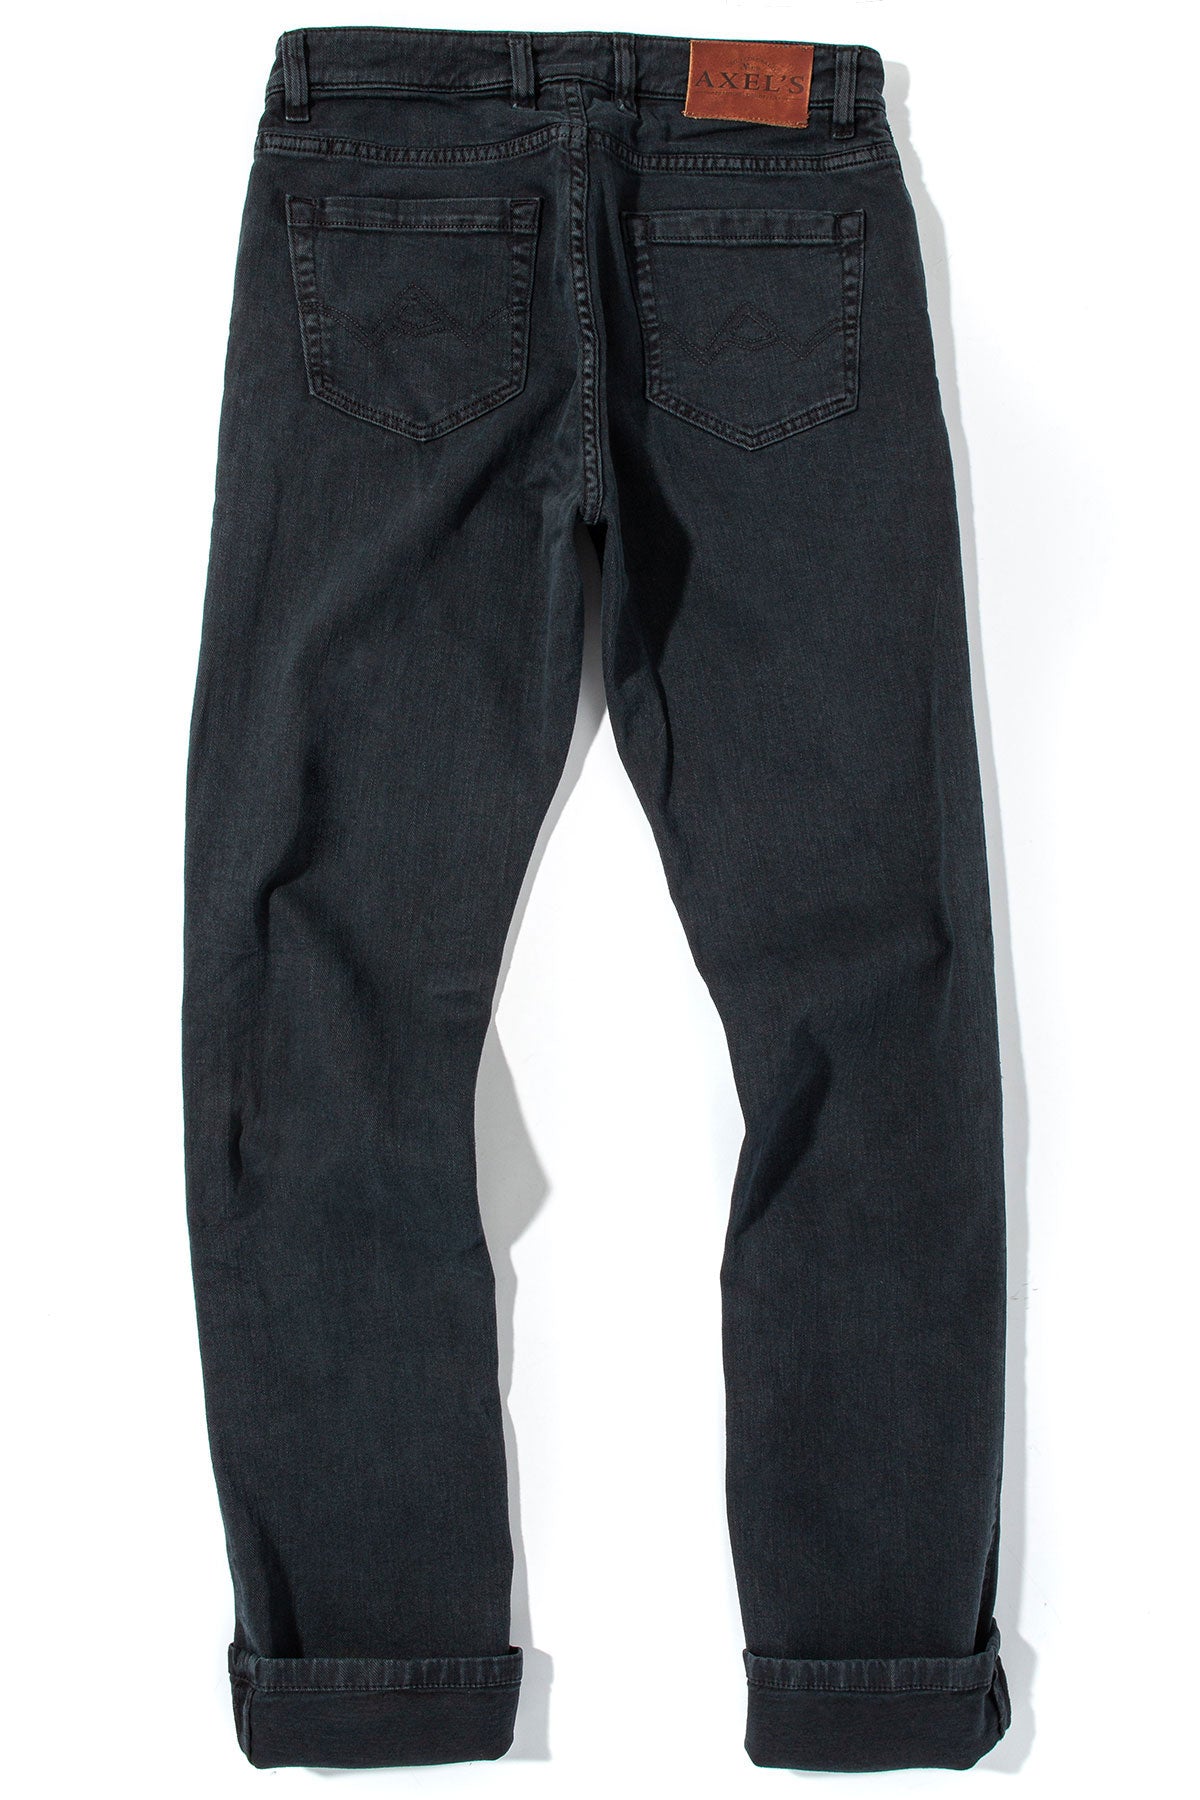 Taos Slim Vintage Denim in Anthracite | Mens - Pants - 5 Pocket | Axels Premium Denim